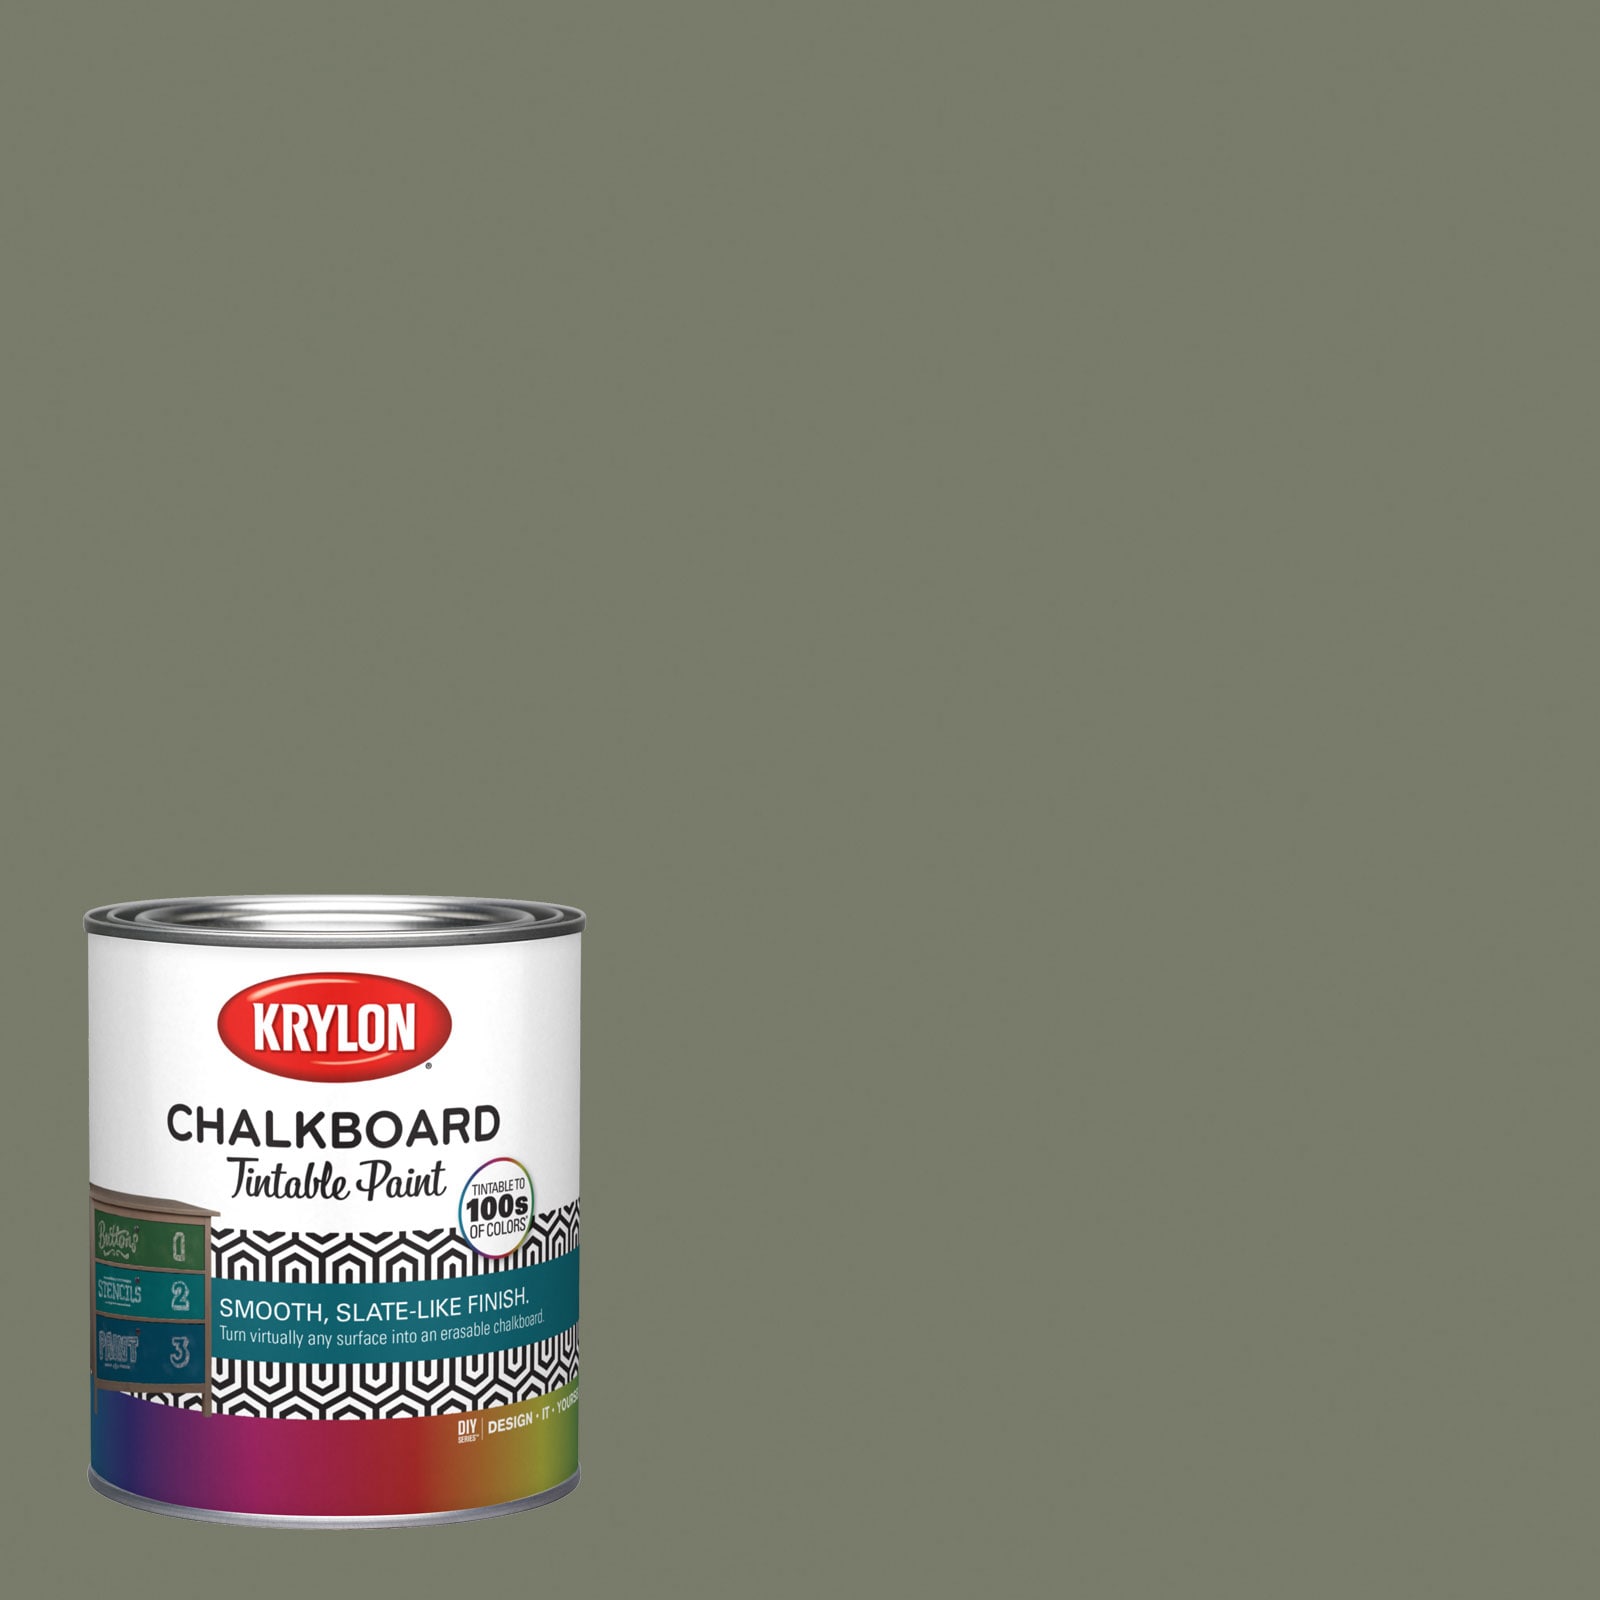 Green, Rust-Oleum Matte Specialty Chalkboard Paint-32 oz- 4 Pack 